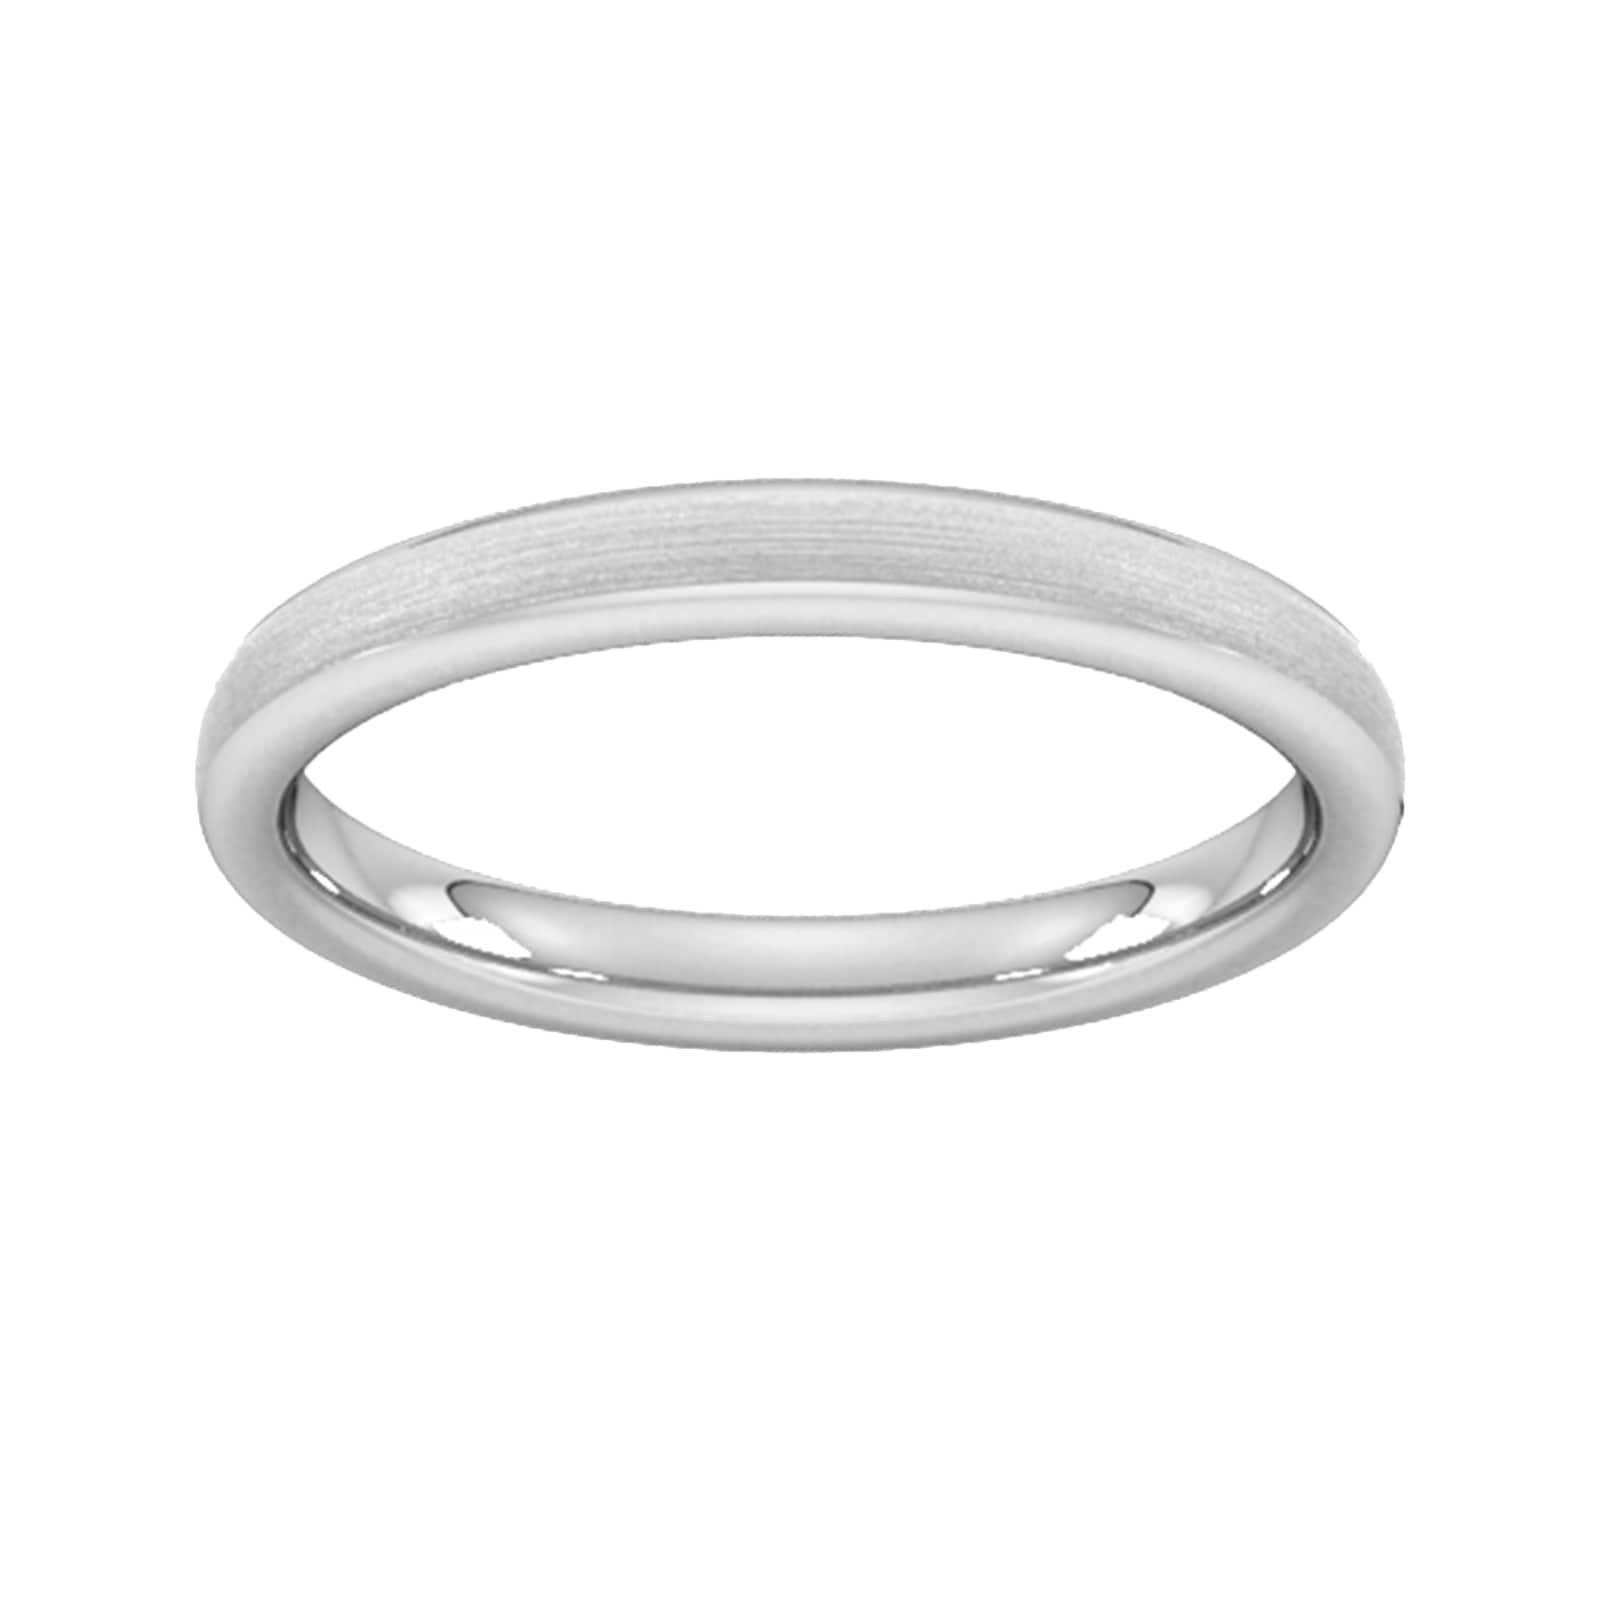 2.5mm Slight Court Extra Heavy Matt Finished Wedding Ring In 18 Carat White Gold - Ring Size Q